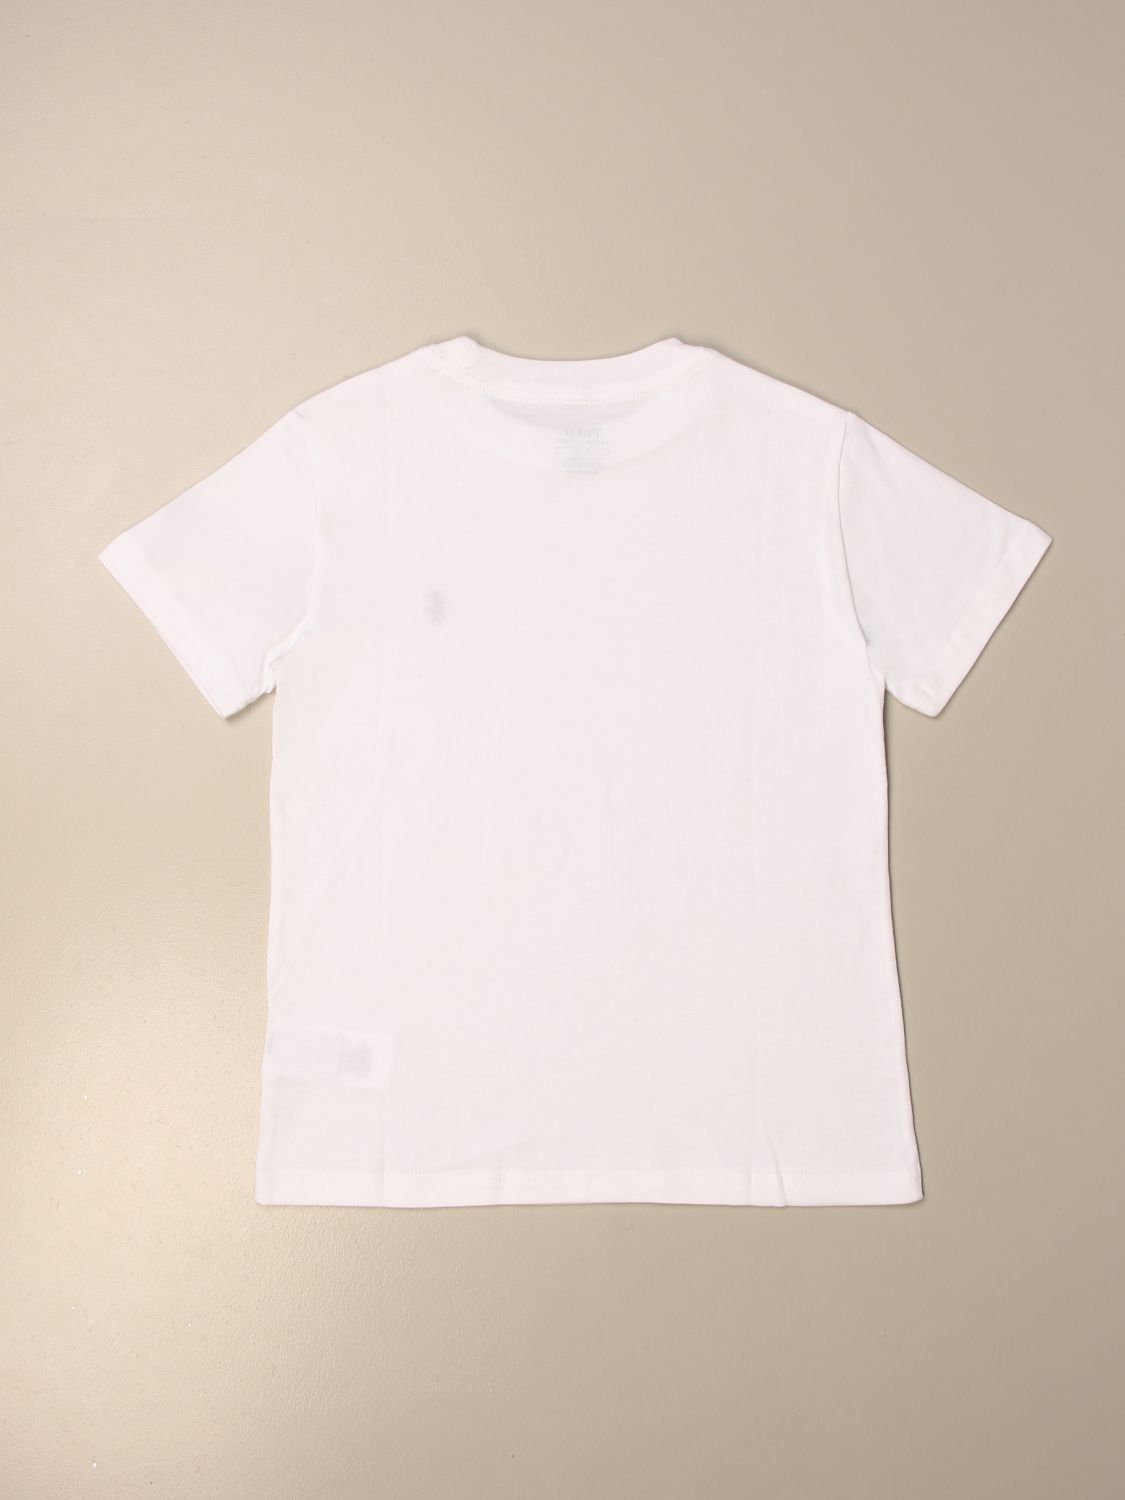 polo ralph lauren plain white t shirt